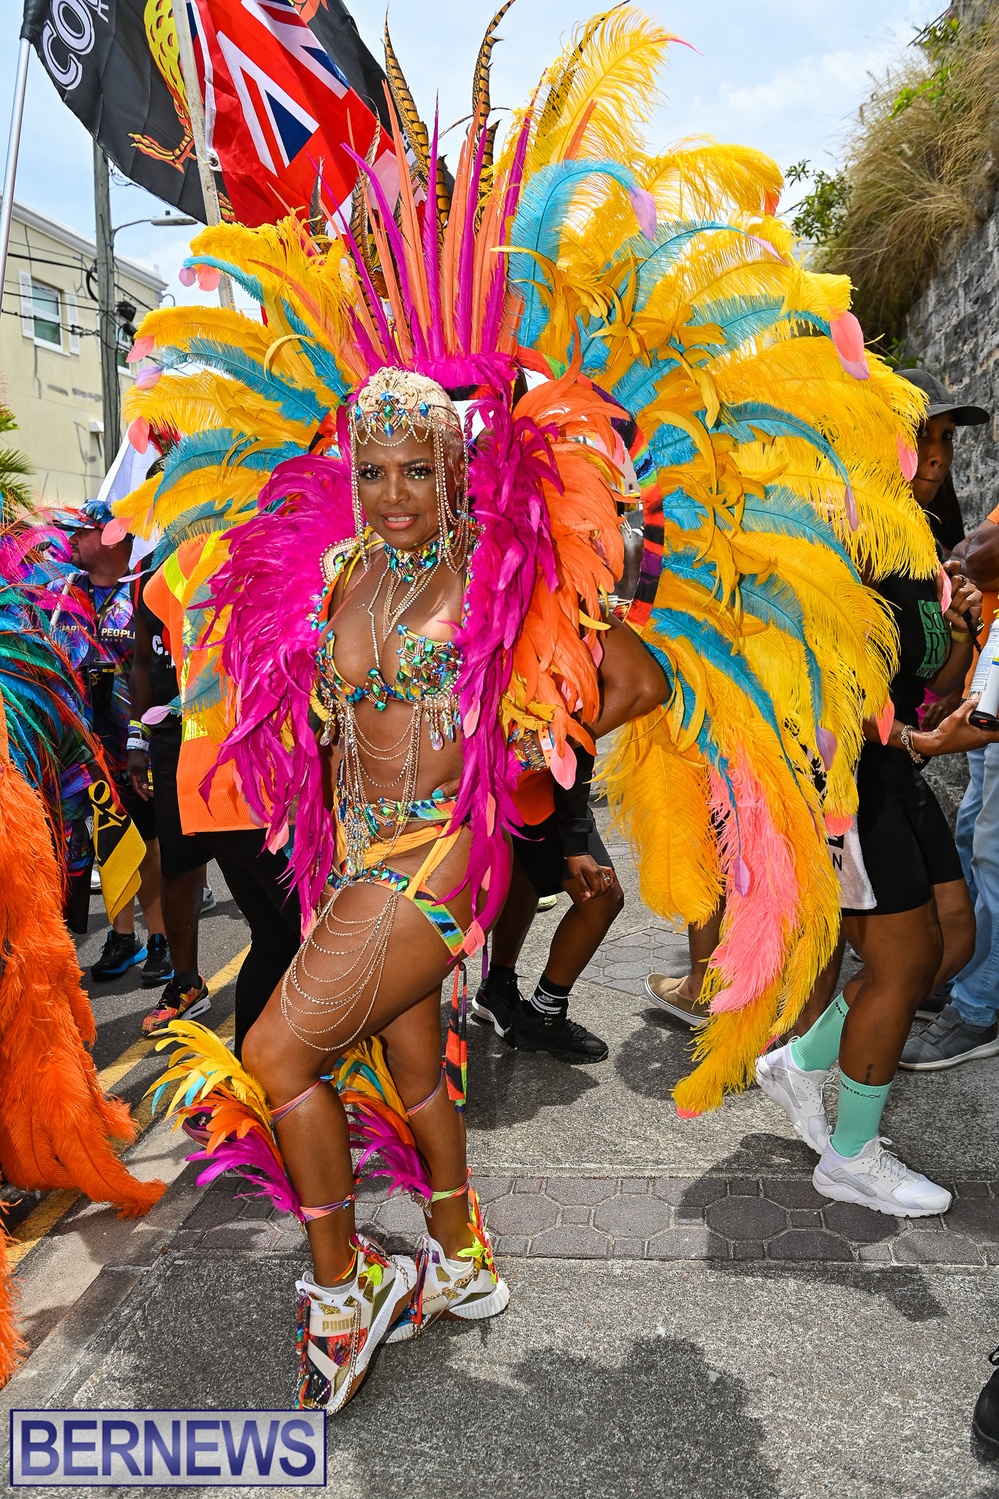 Carnival in Bermuda ‘Revel de Road’ event  party June 2022 AW (36)